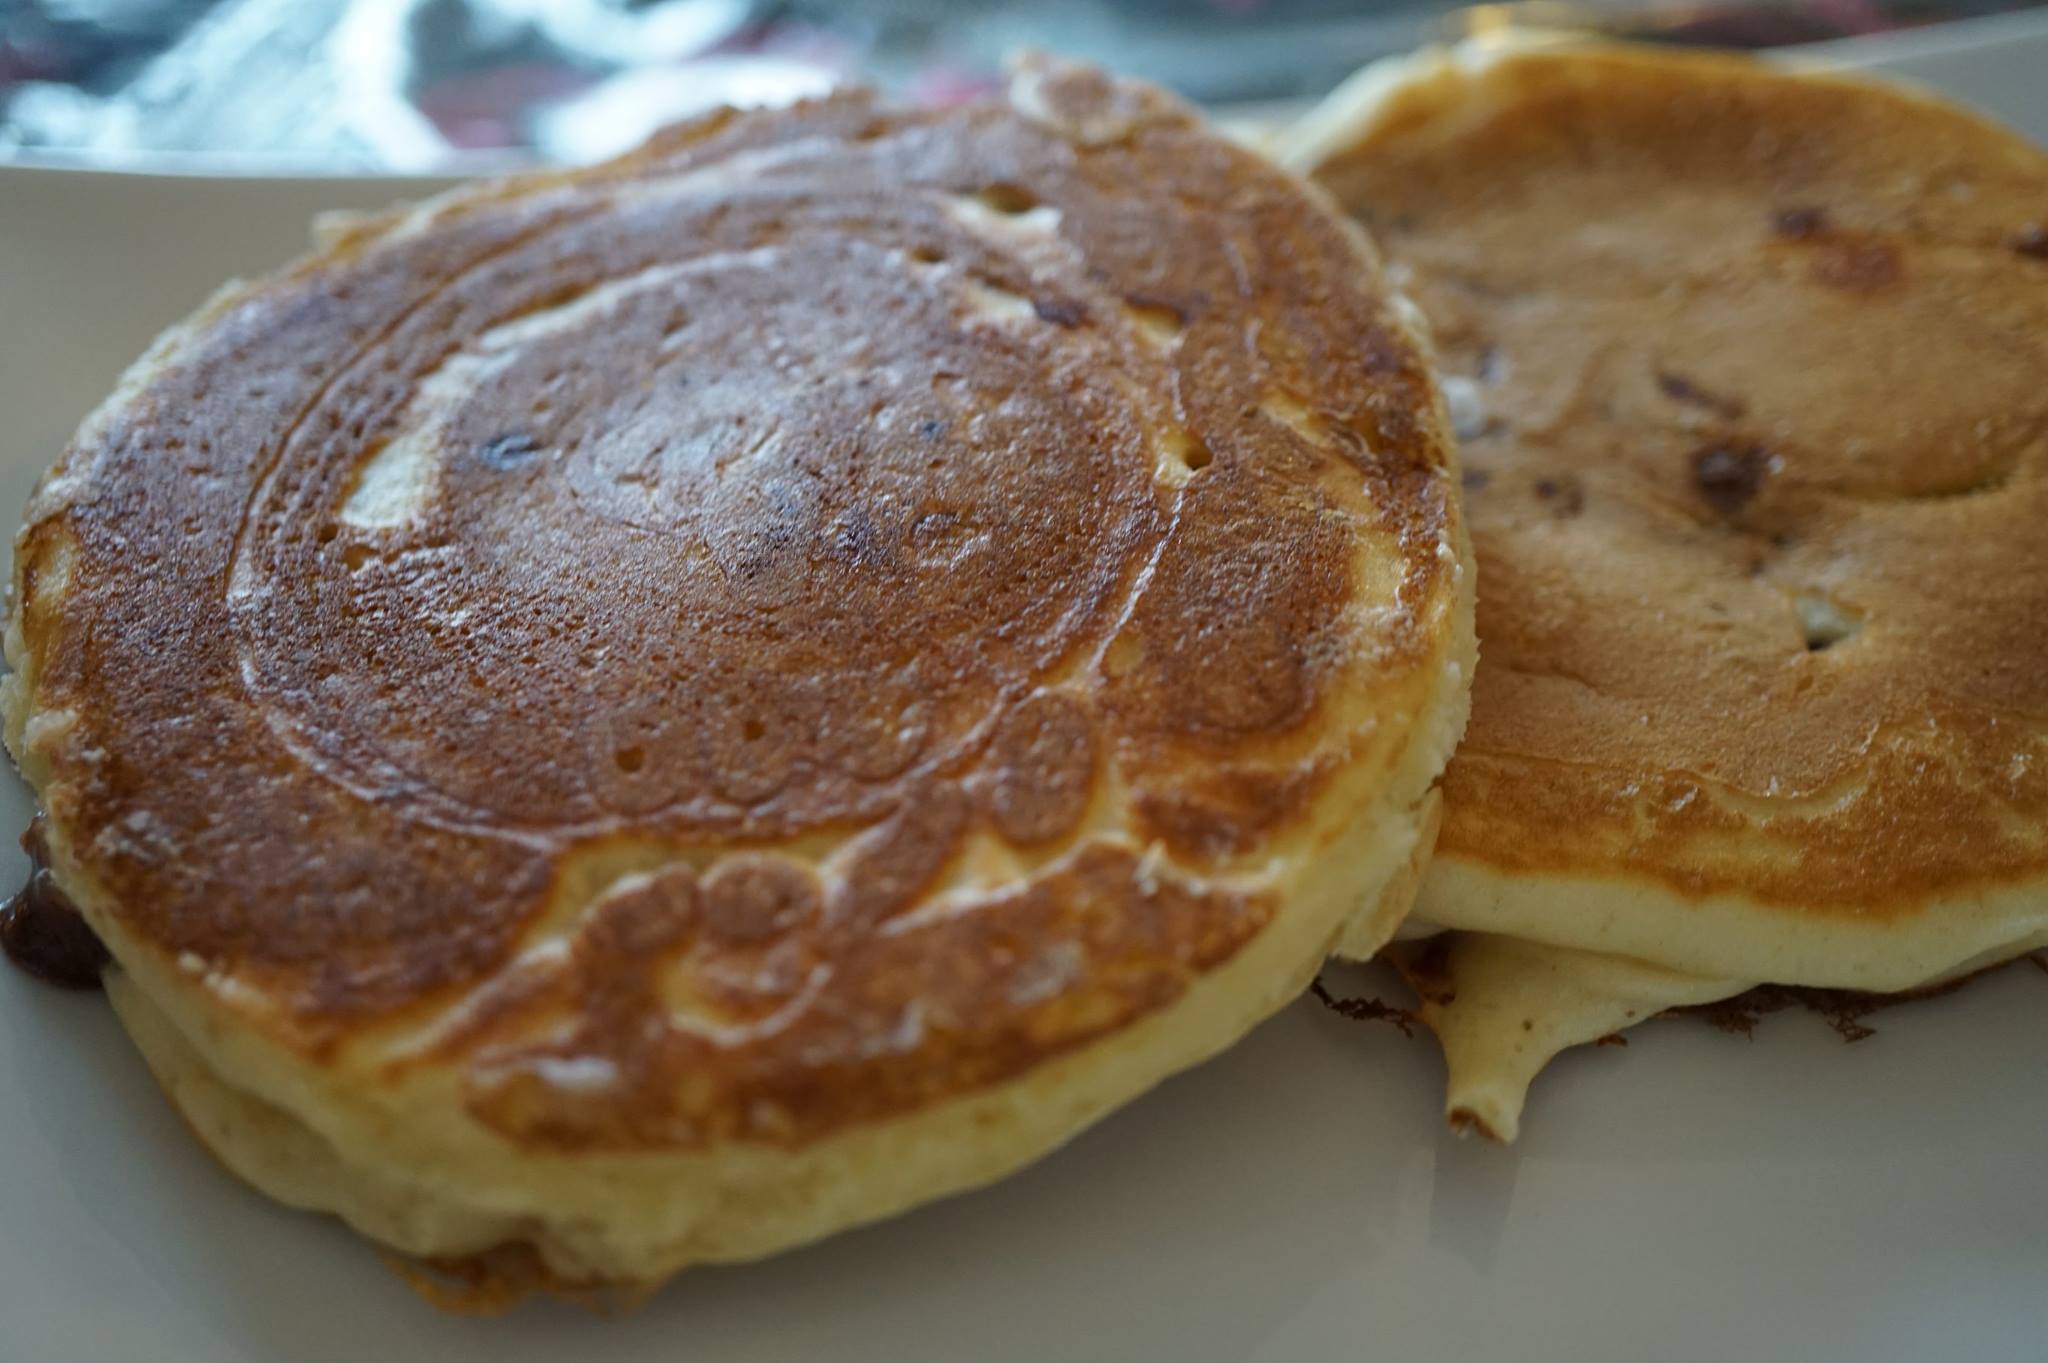 Pancakes au nutella/banane